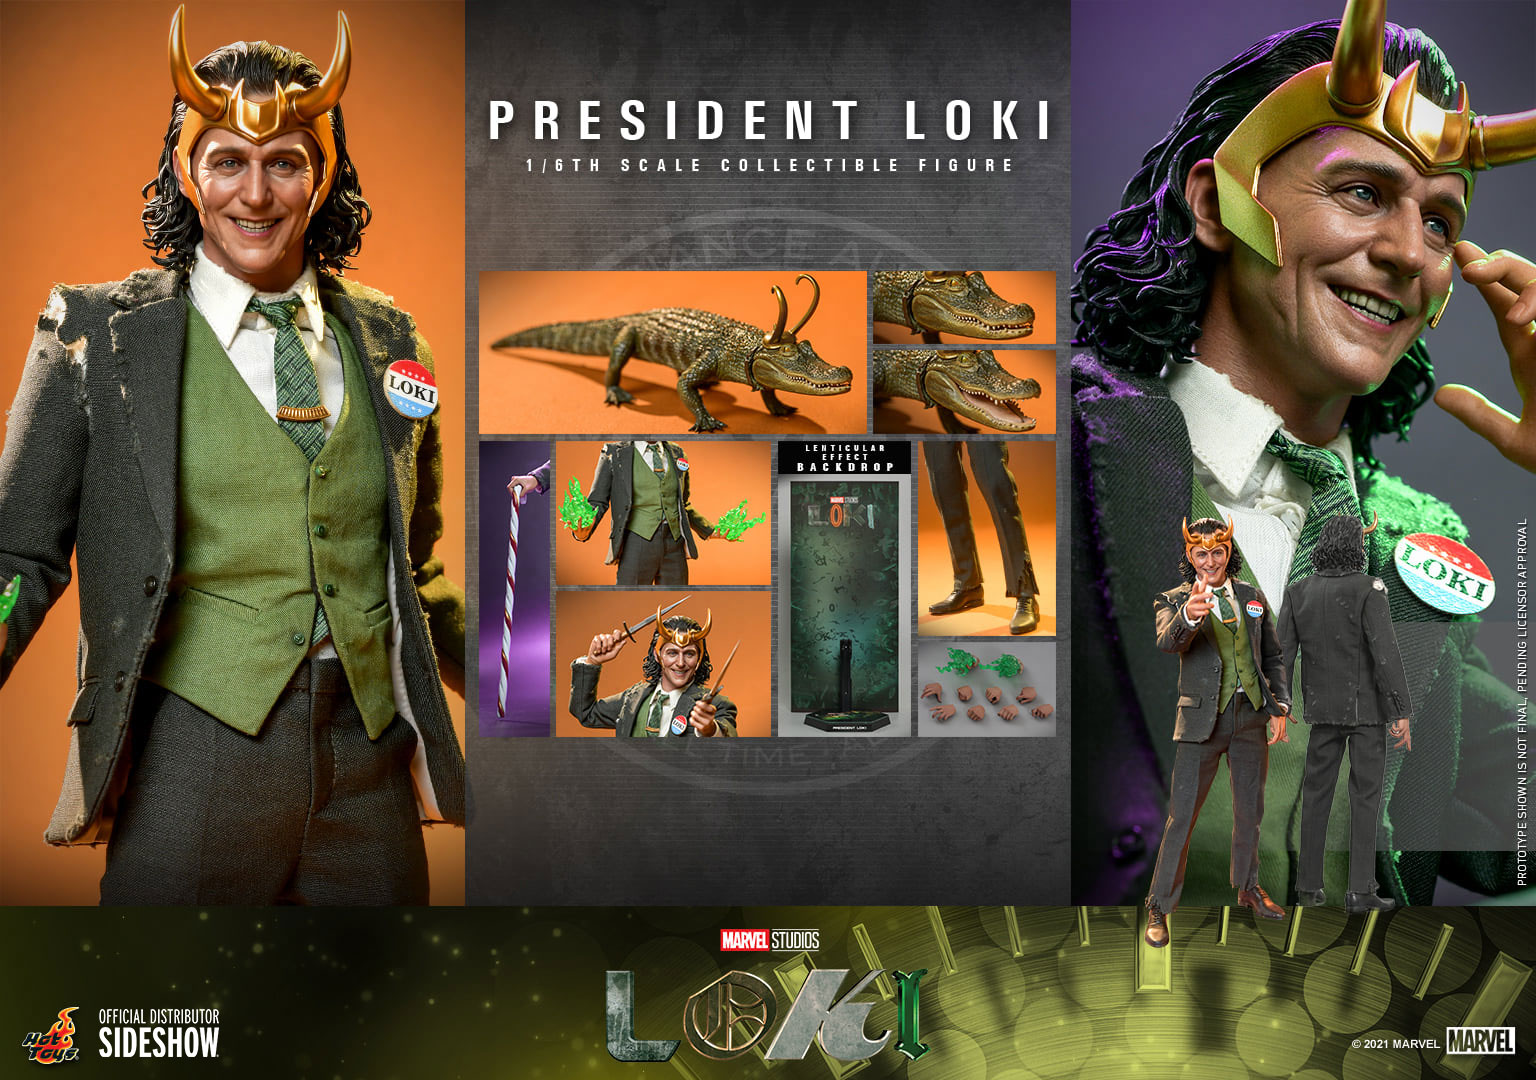 President Loki (Disney+) Sixth Scale Figure by Hot Toys